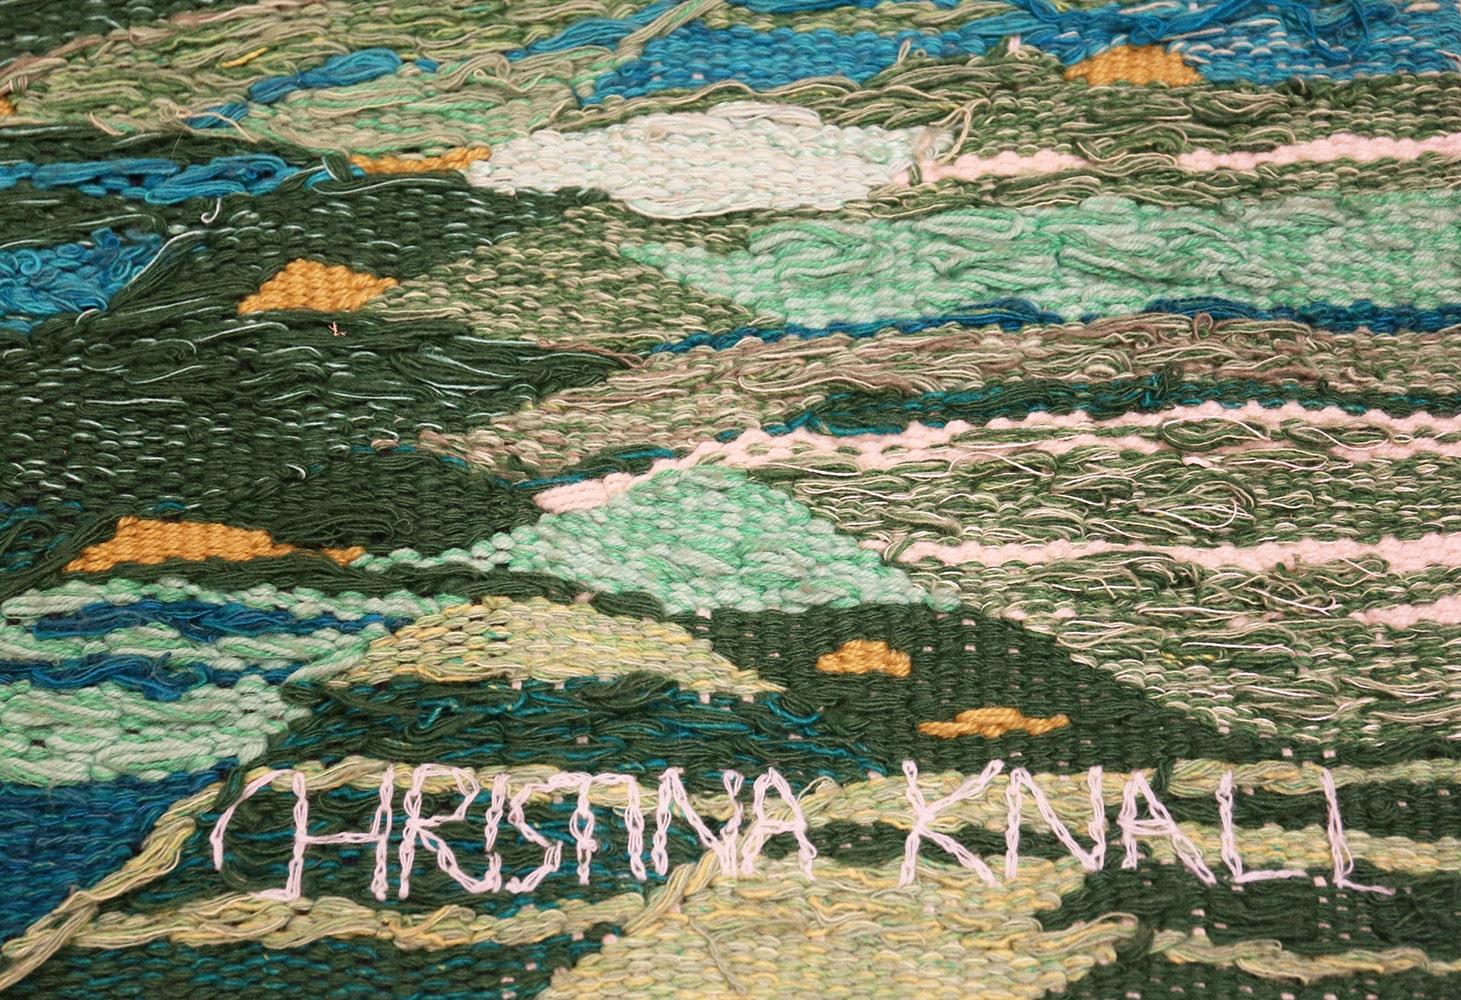 Scandinavian tapestry by Christina Knall, Origin: Scandinavia, circa date: Mid-20th century. Size: 3 ft 10 in x 5 ft (1.17 m x 1.52 m)

